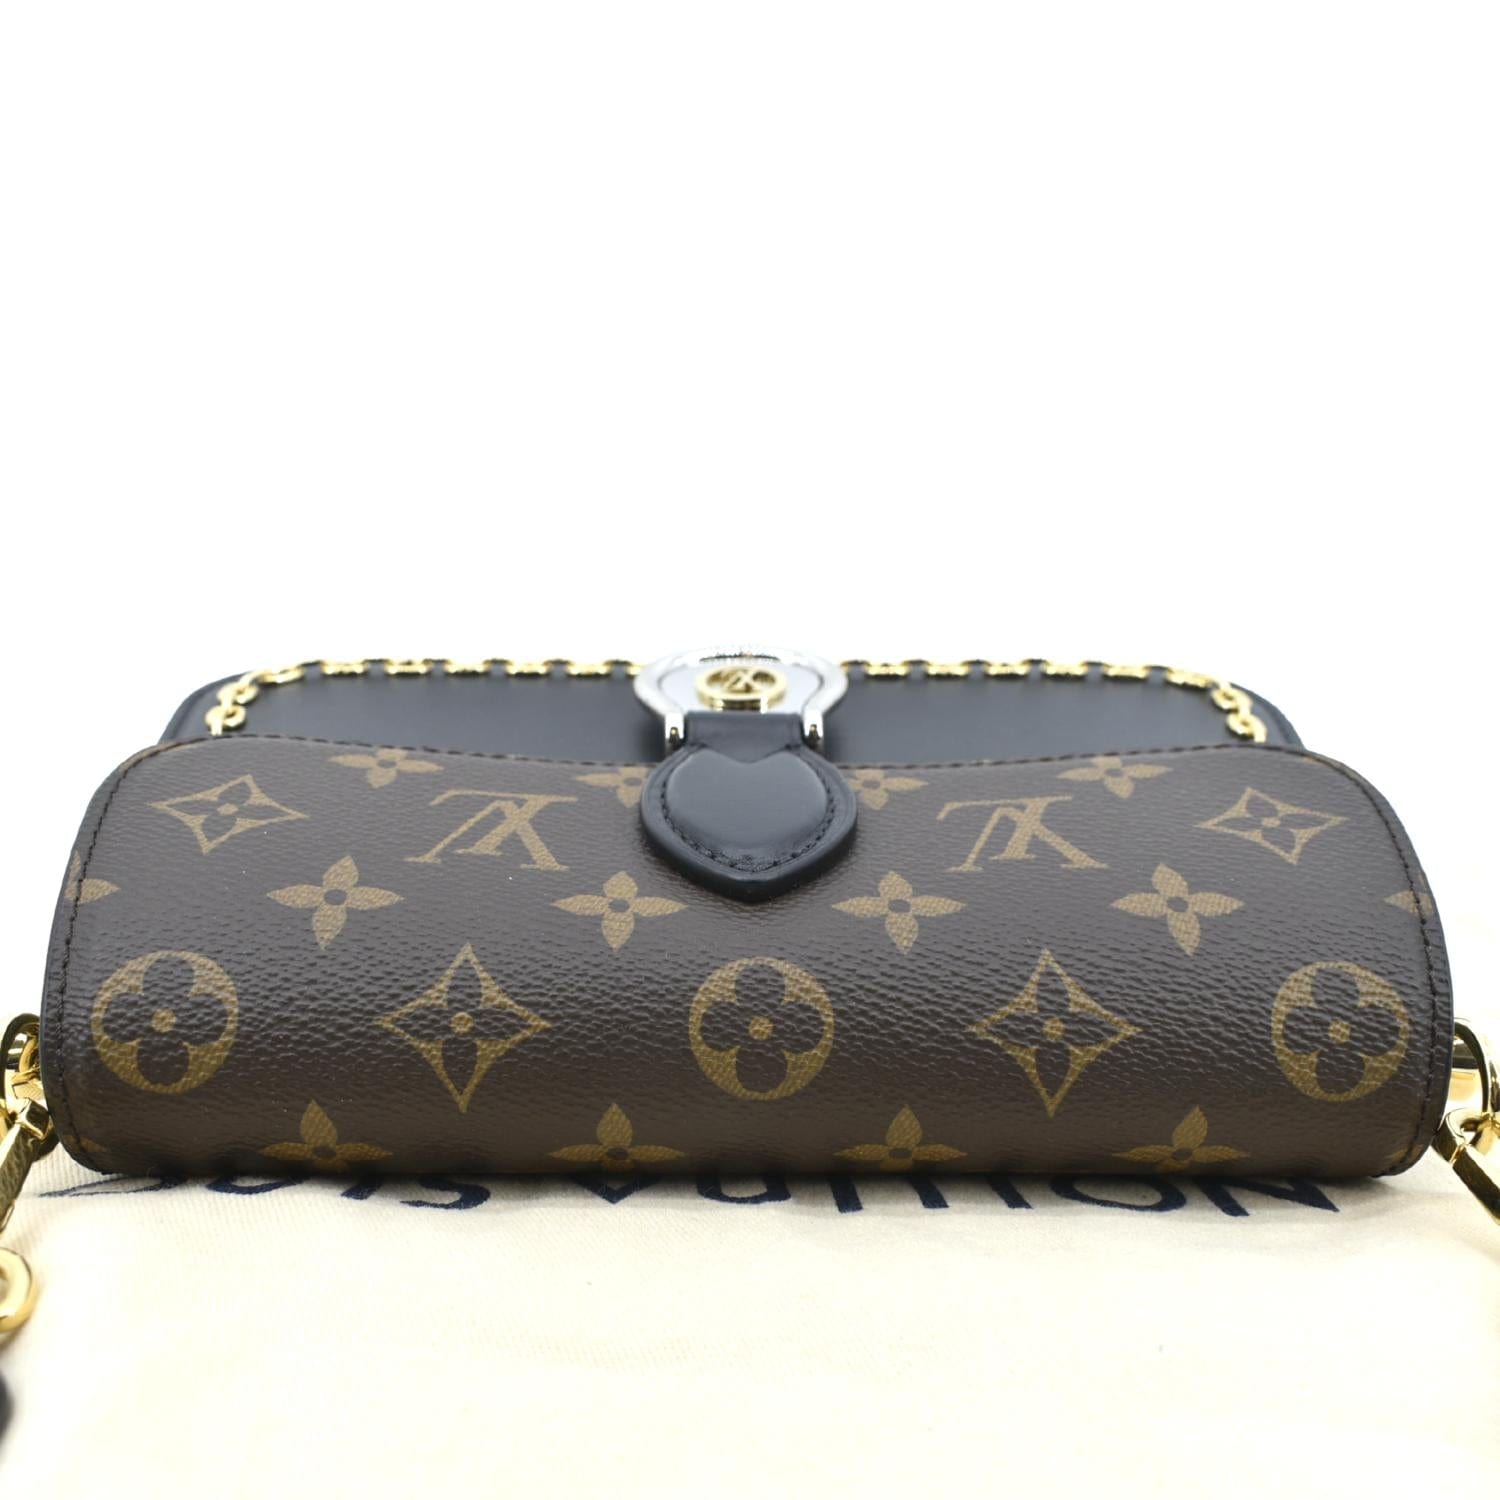 Louis Vuitton NEO SAINT CLOUD bag, Louis vuitton handbags, louis